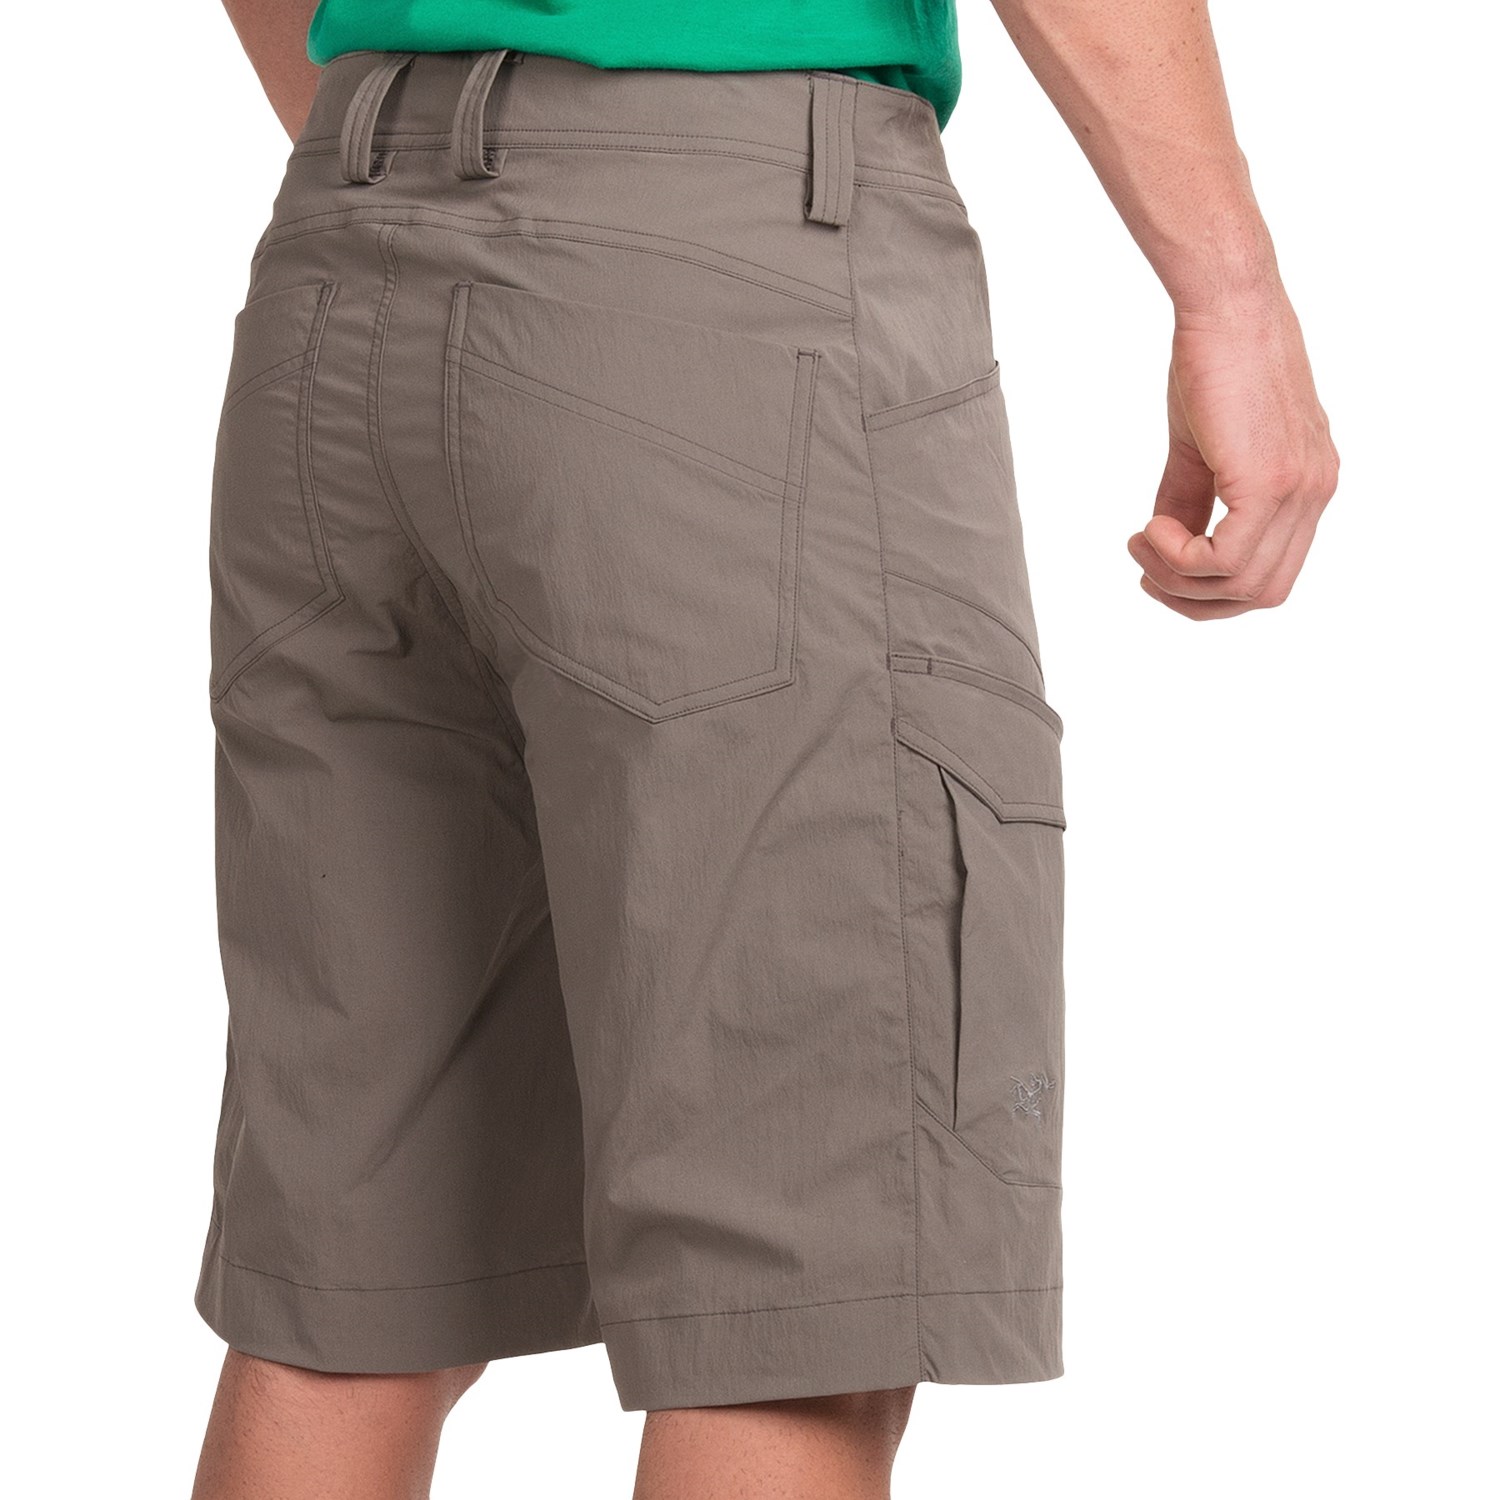 Arc’teryx Rampart Long Shorts (For Men) 9353K - Save 55%